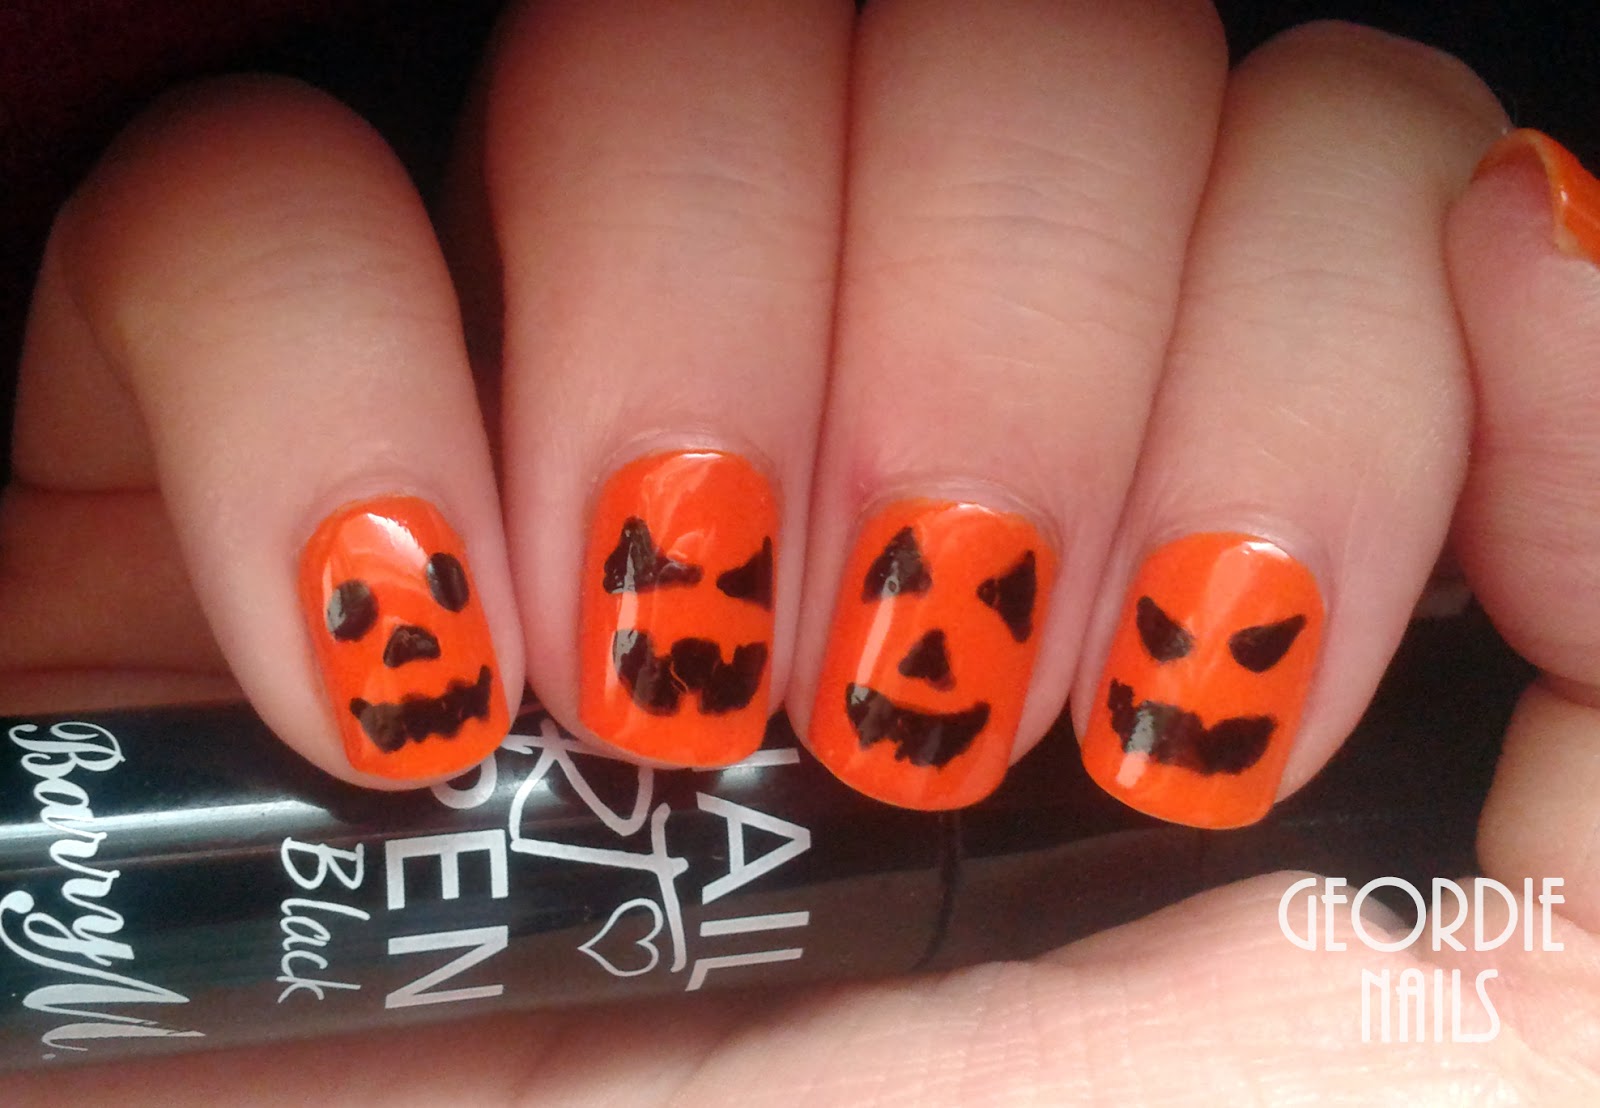 Geordie Nails: Halloween Pumpkin Manicure